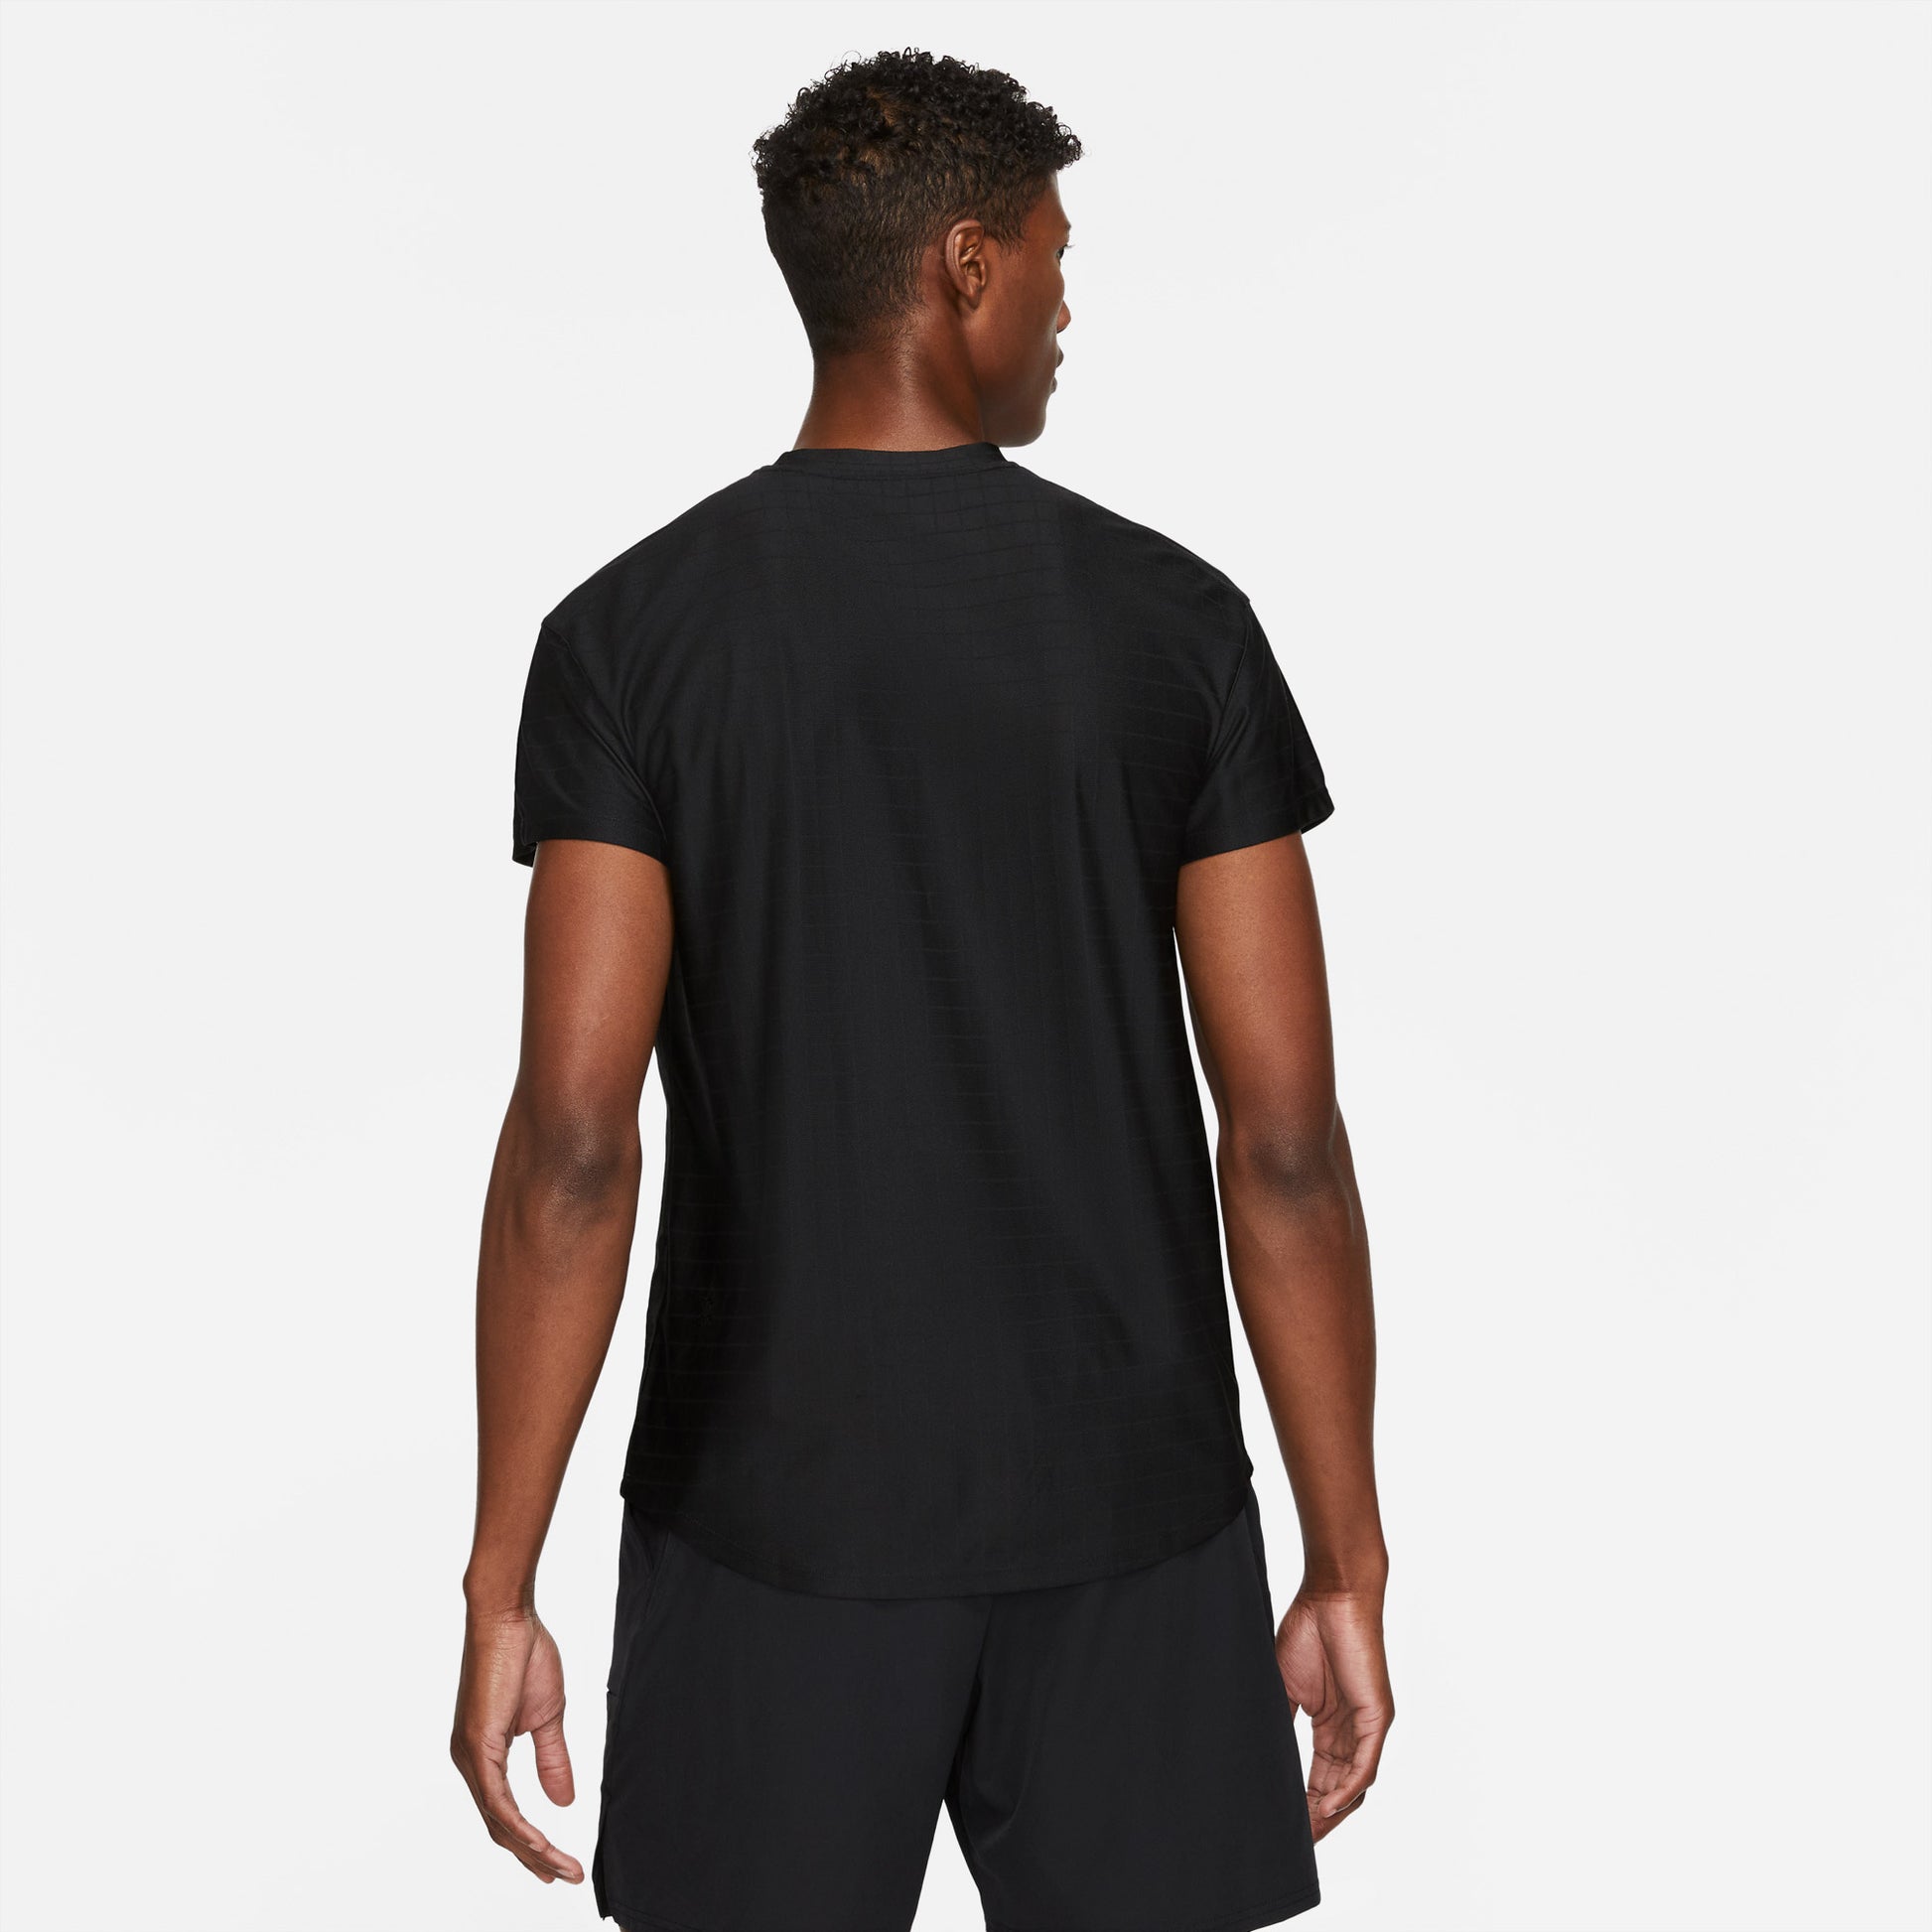 Nike Breathe Advantage Men's Tennis Shirt Black (2)